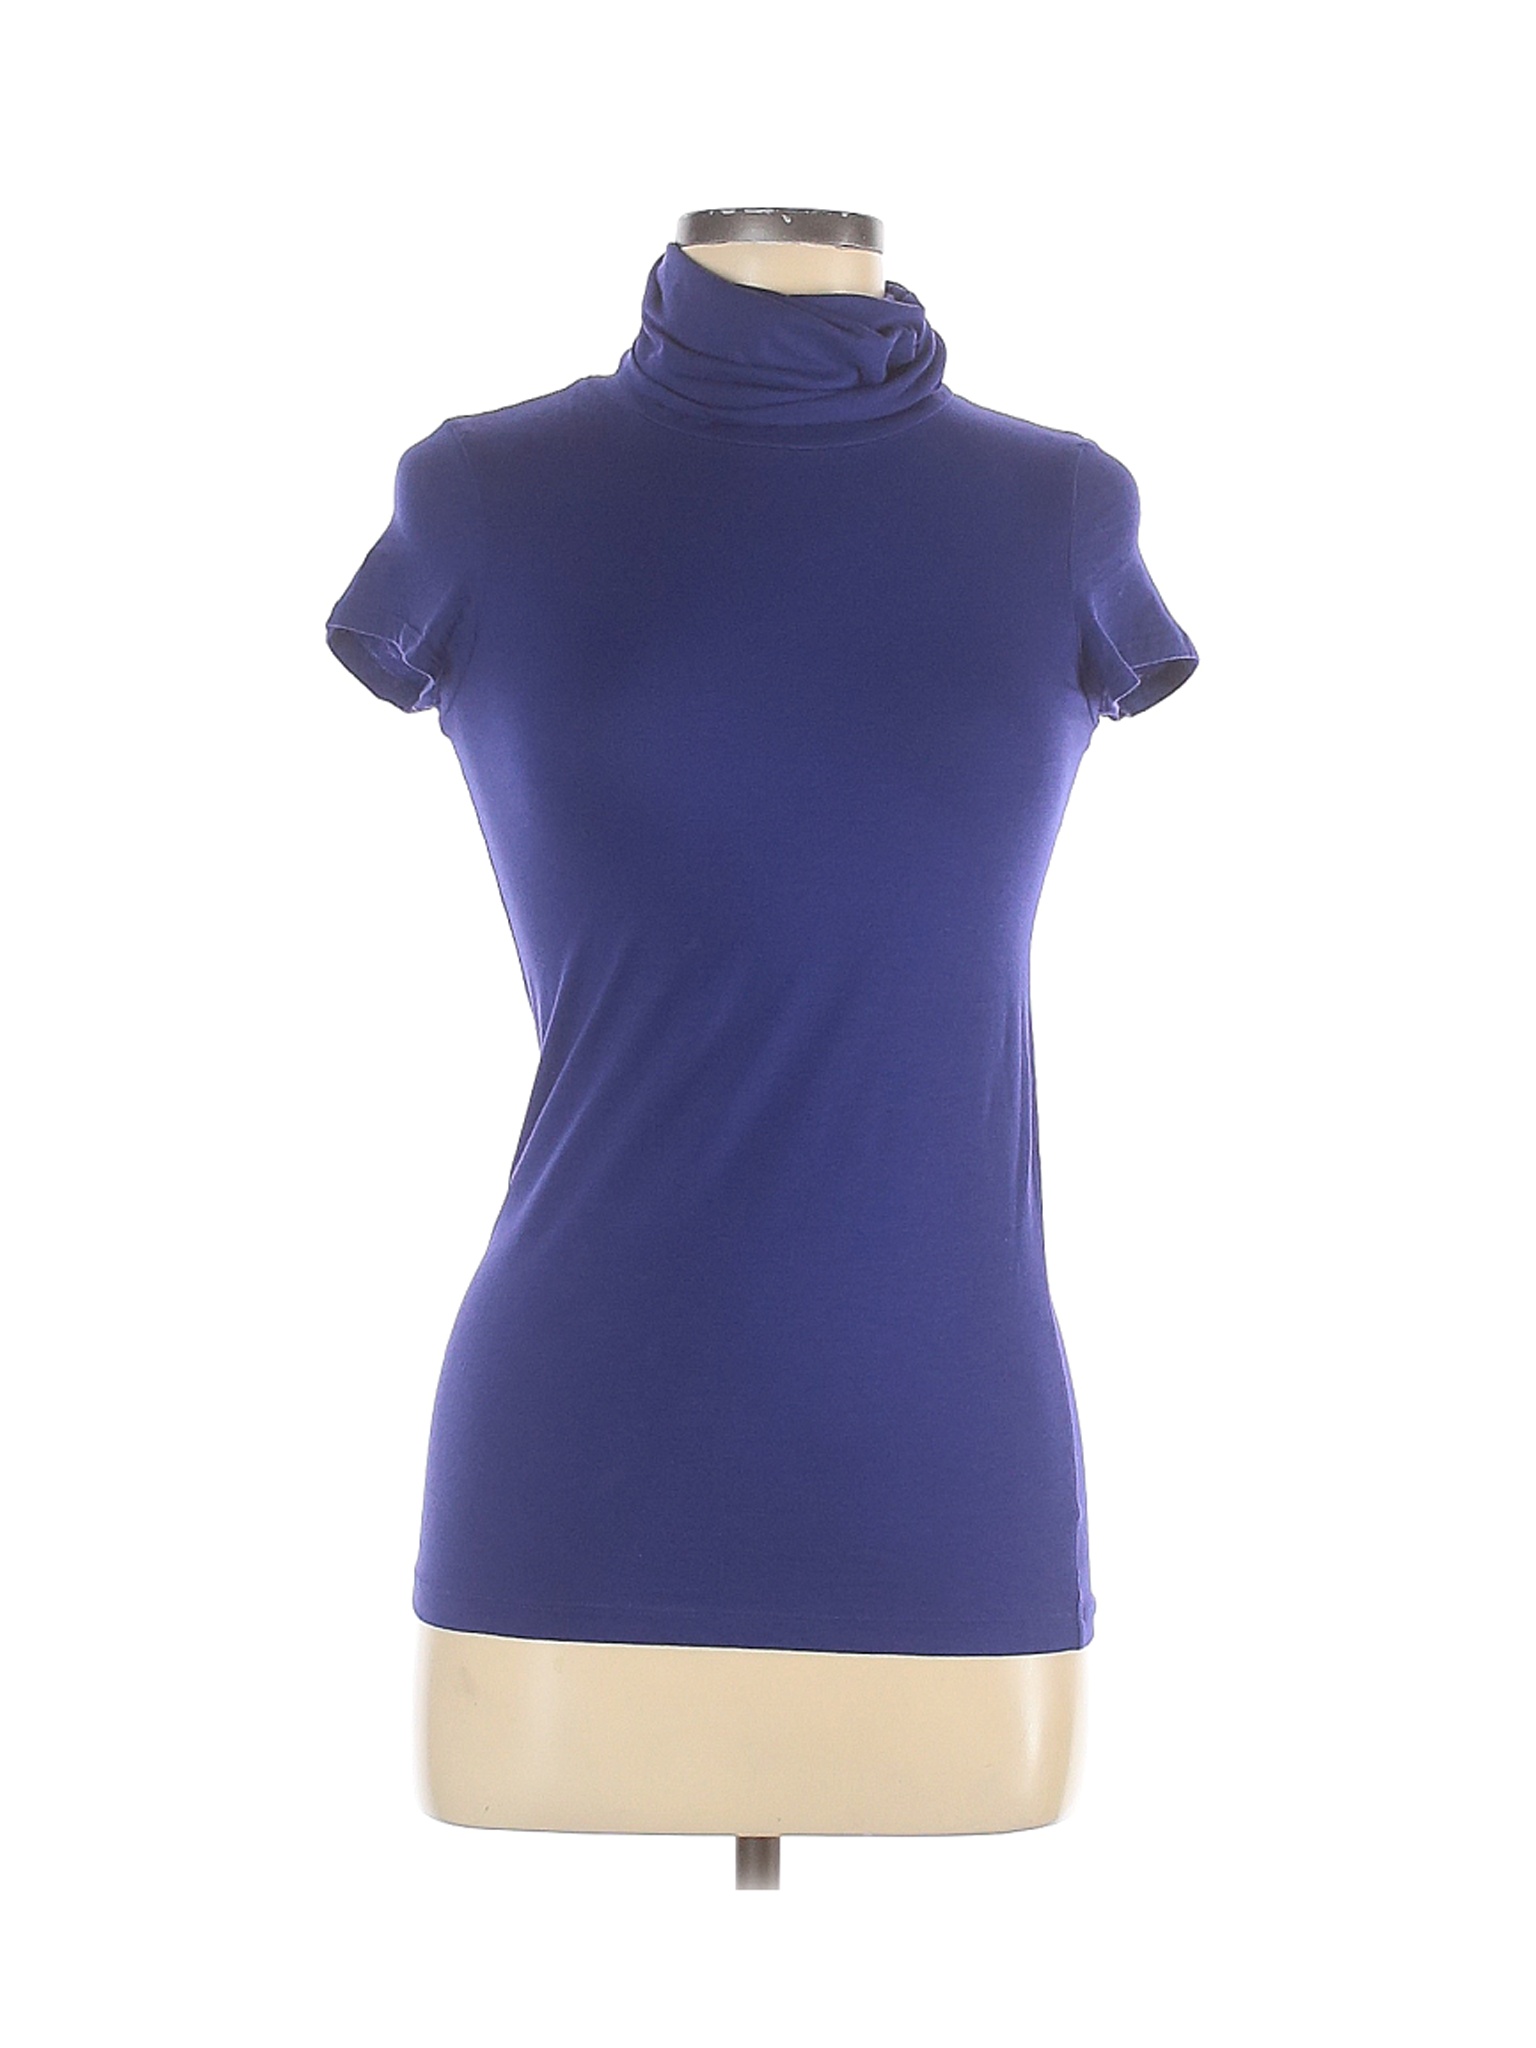 Theory Women Blue Short Sleeve Turtleneck M | eBay